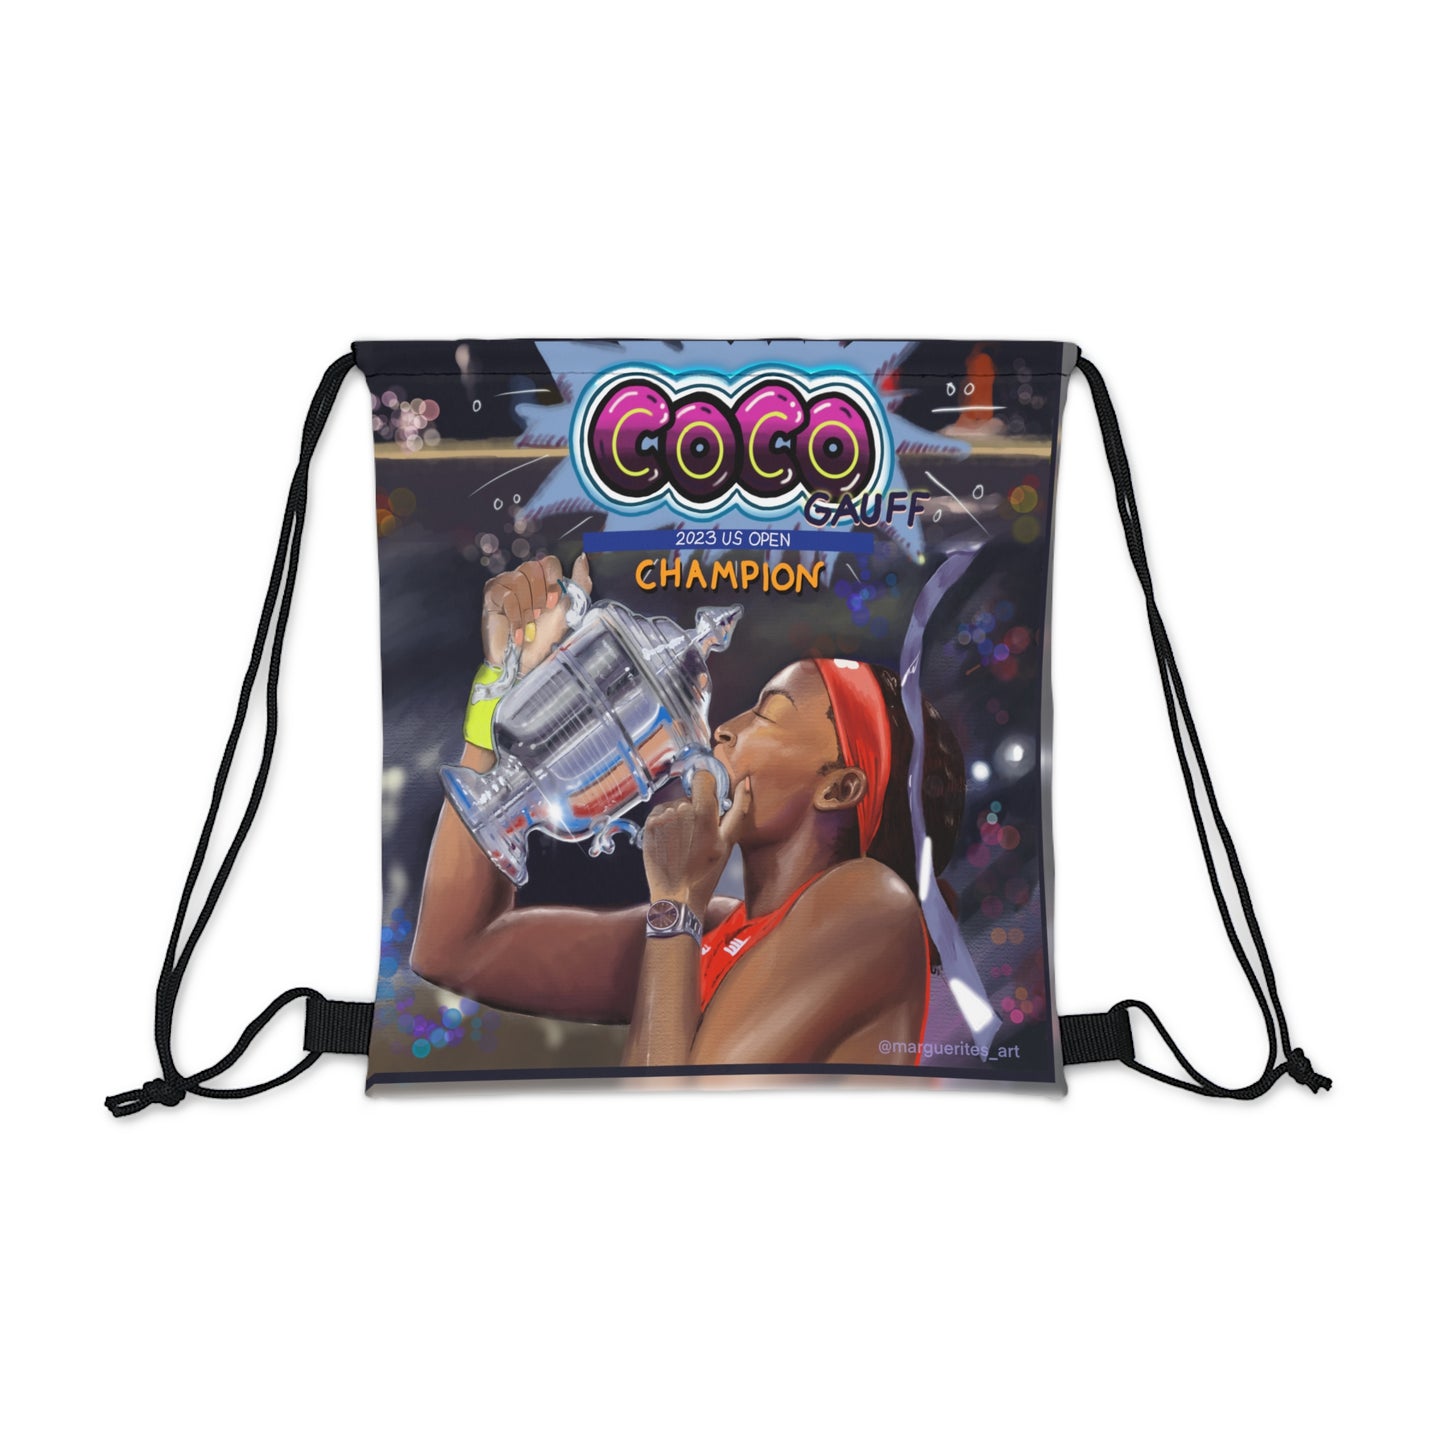 Tennis Champ Coco Gauff Outdoor Drawstring Bag